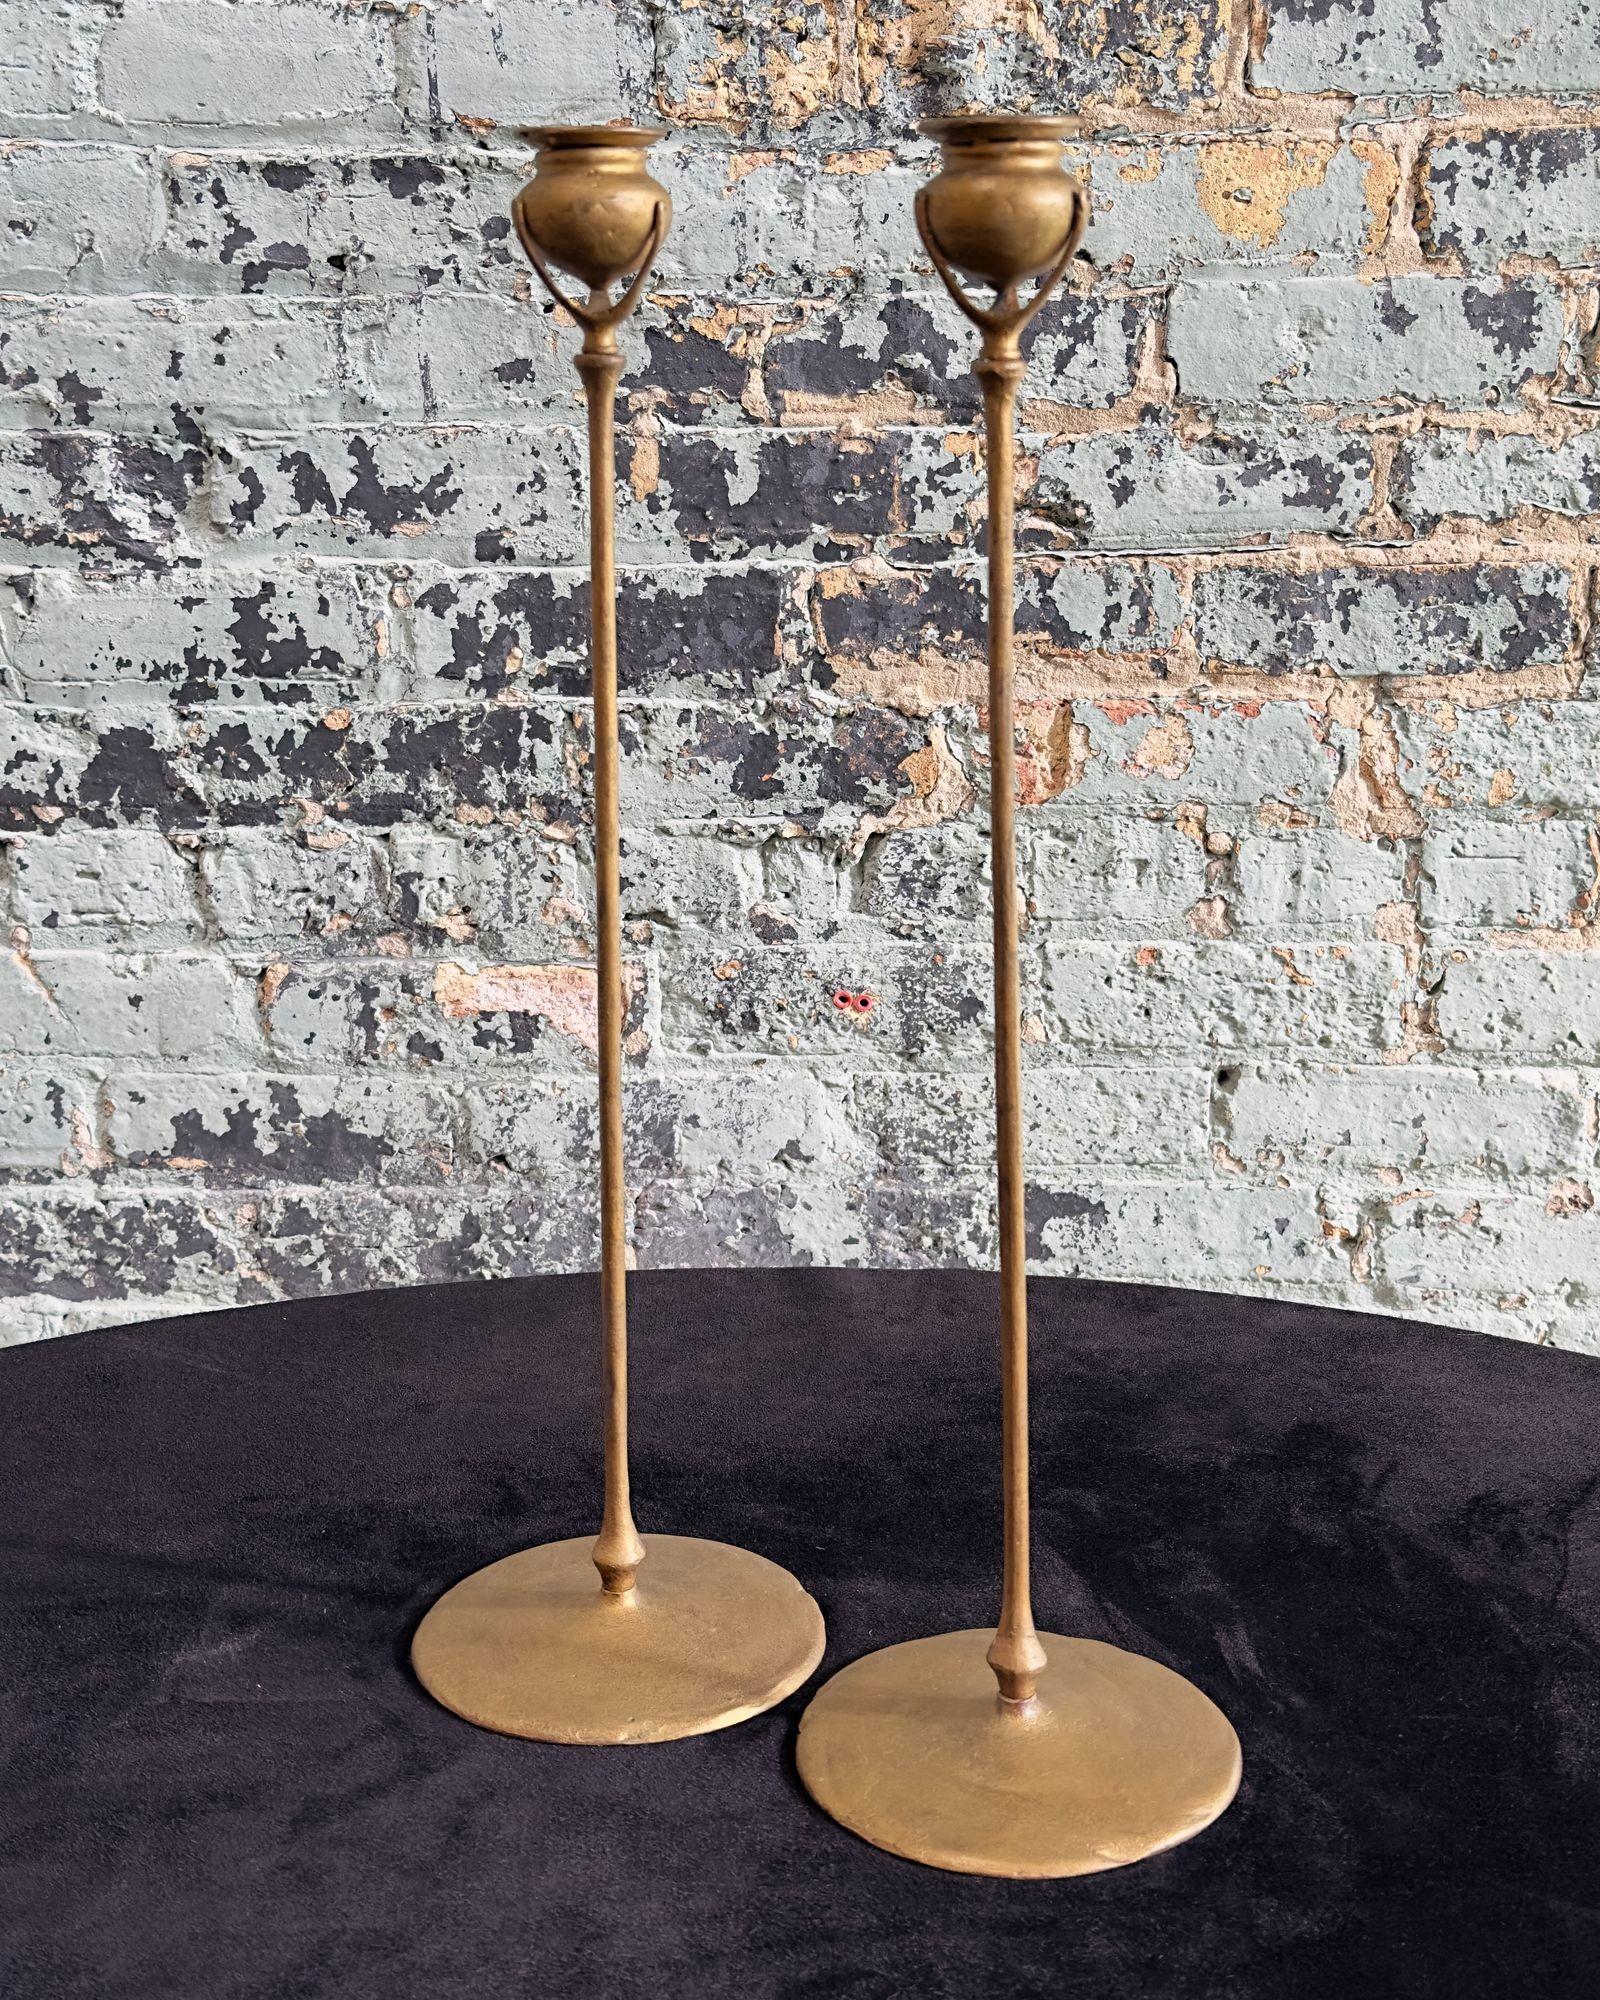 Tiffany Studios New York 1213 Gilt Bronze Candlesticks.
Amazing pair of early gilt bronze candlesticks, model 1213 circa 1900. Stamped Tiffany Studios New York.
Candlesticks measure 20.25